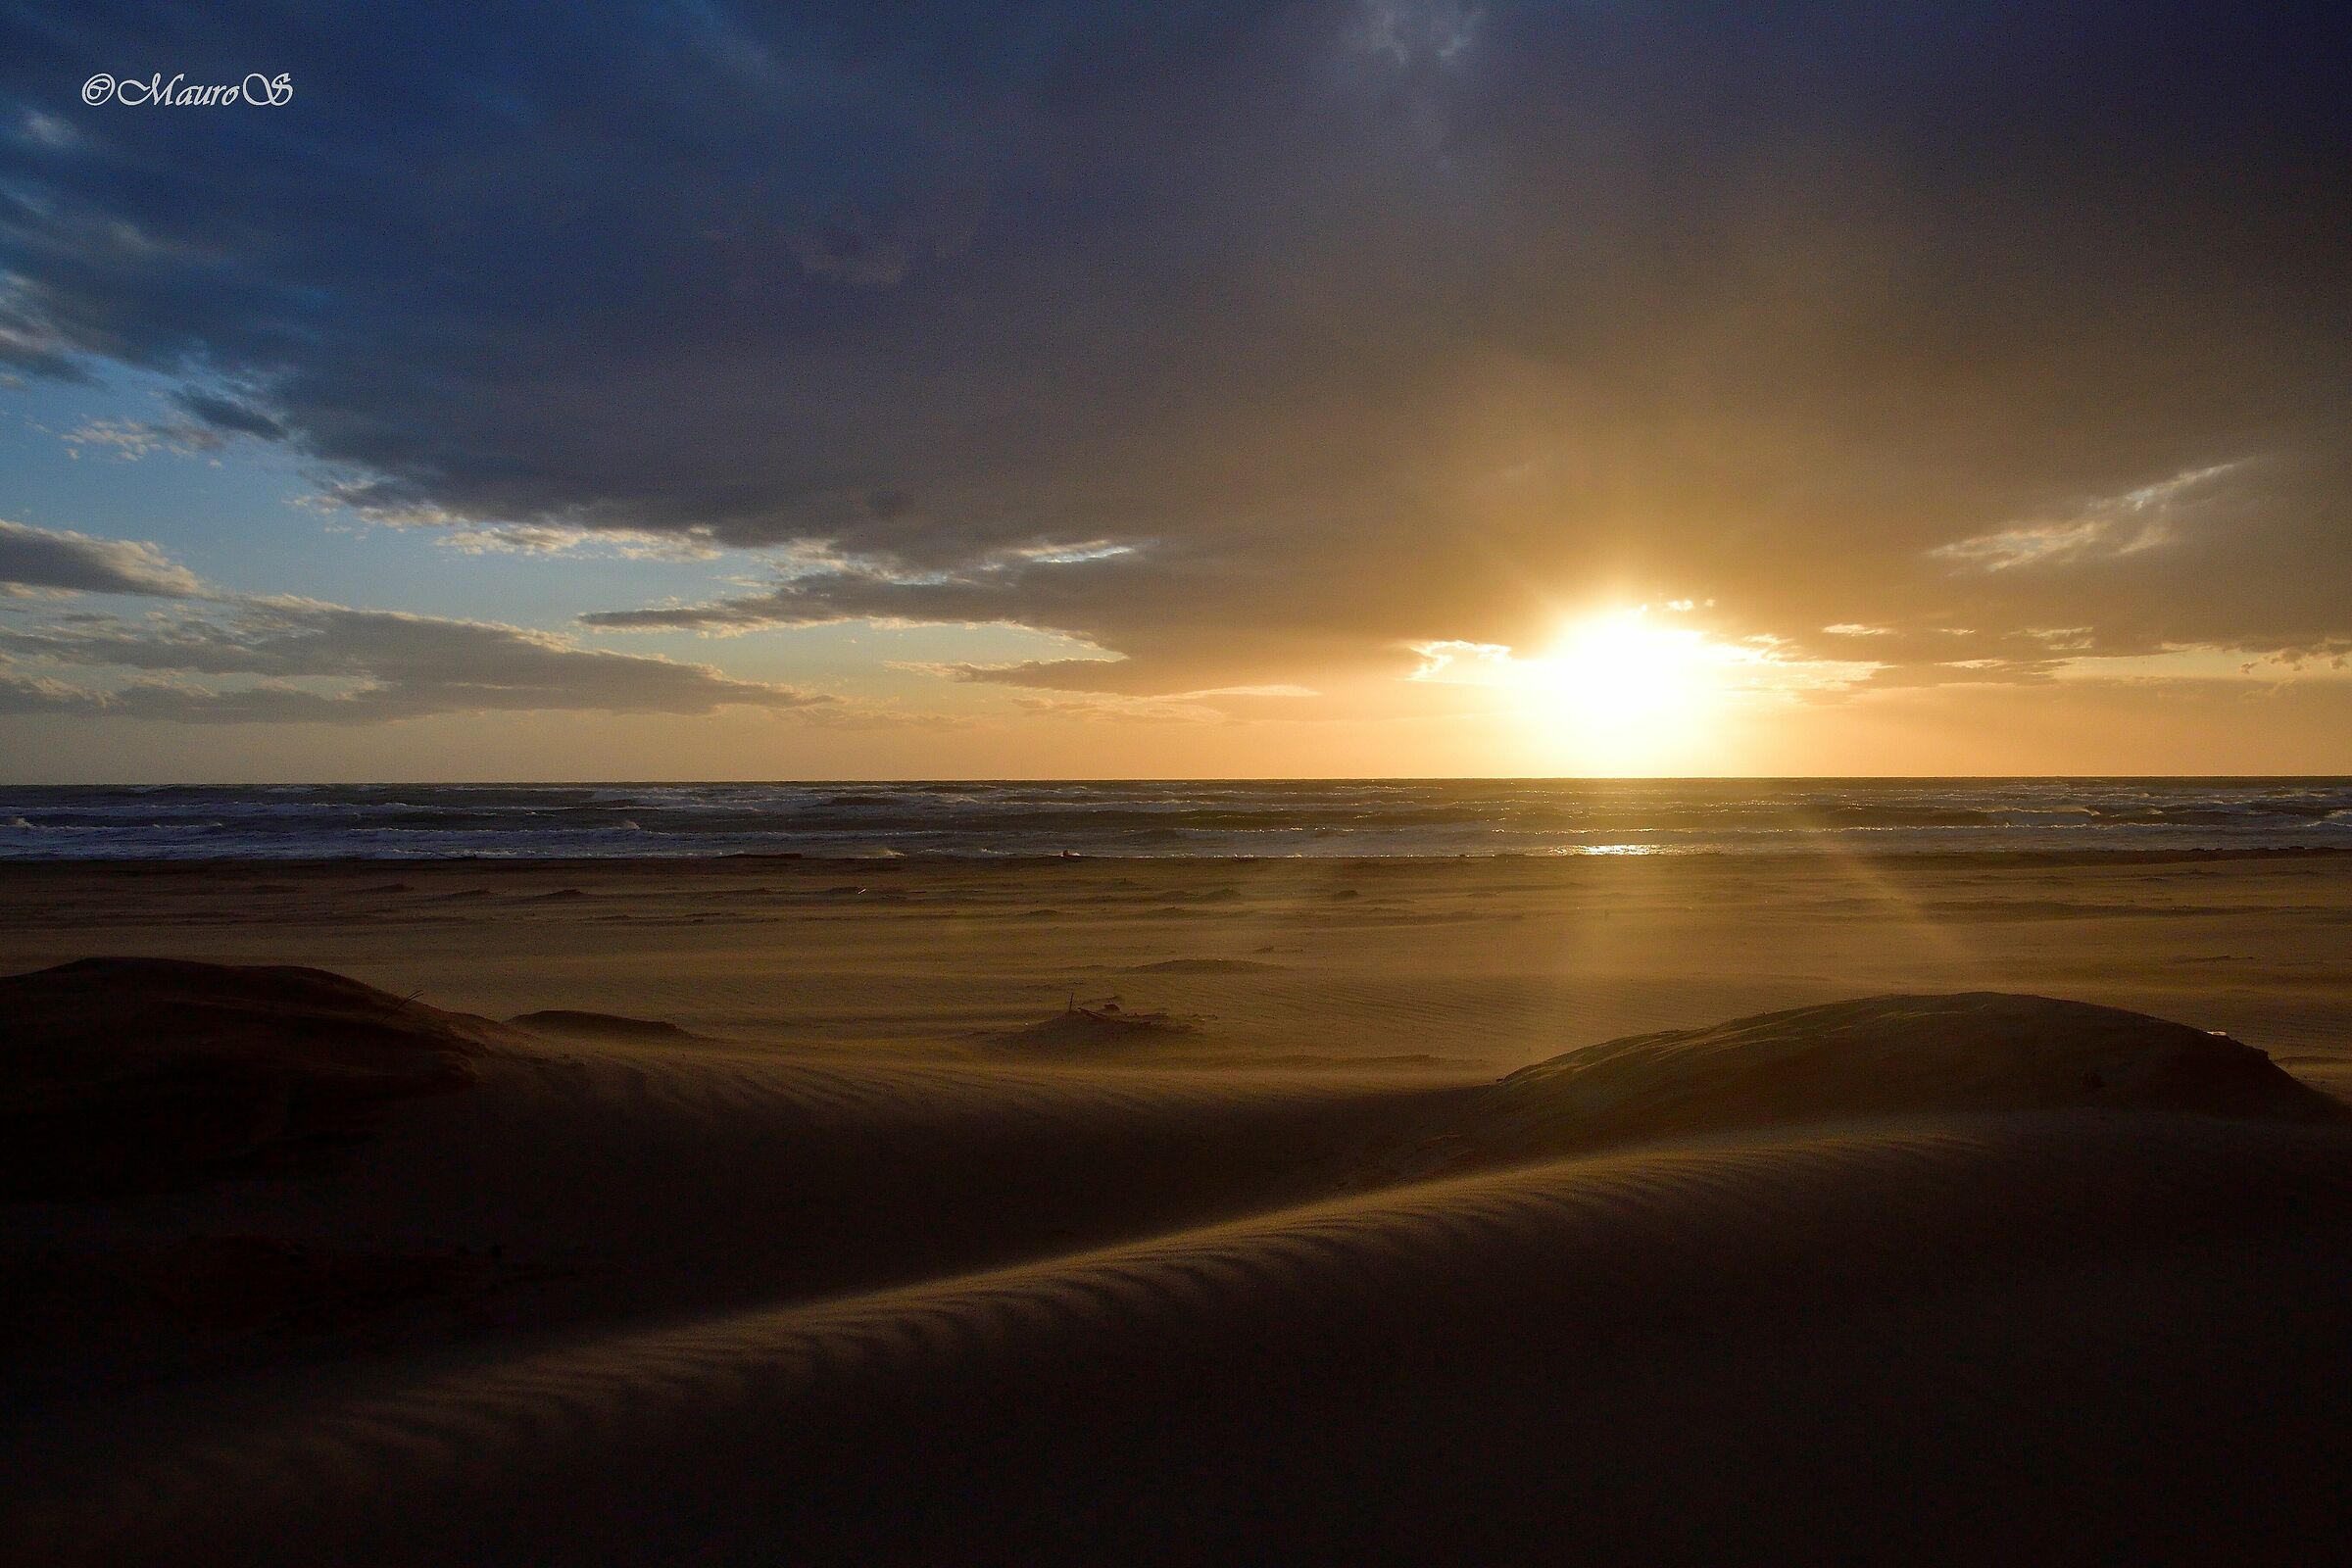 Dunes at sunset...